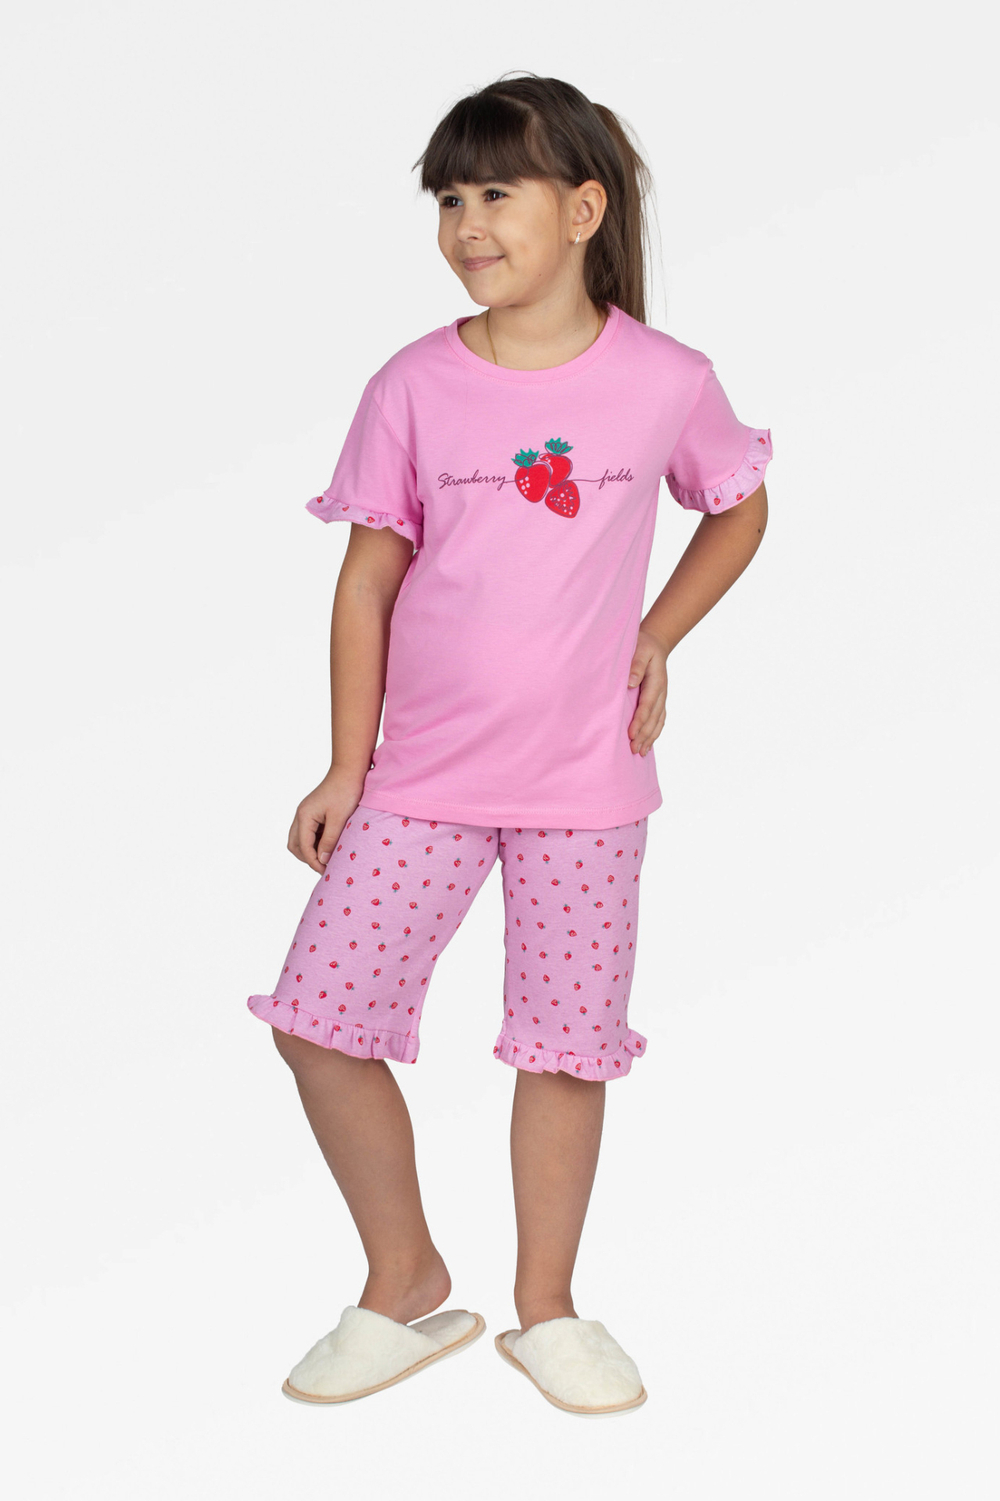 Л3196-8088 клубнички на розовом+розовый,пижама для девочки Basia.